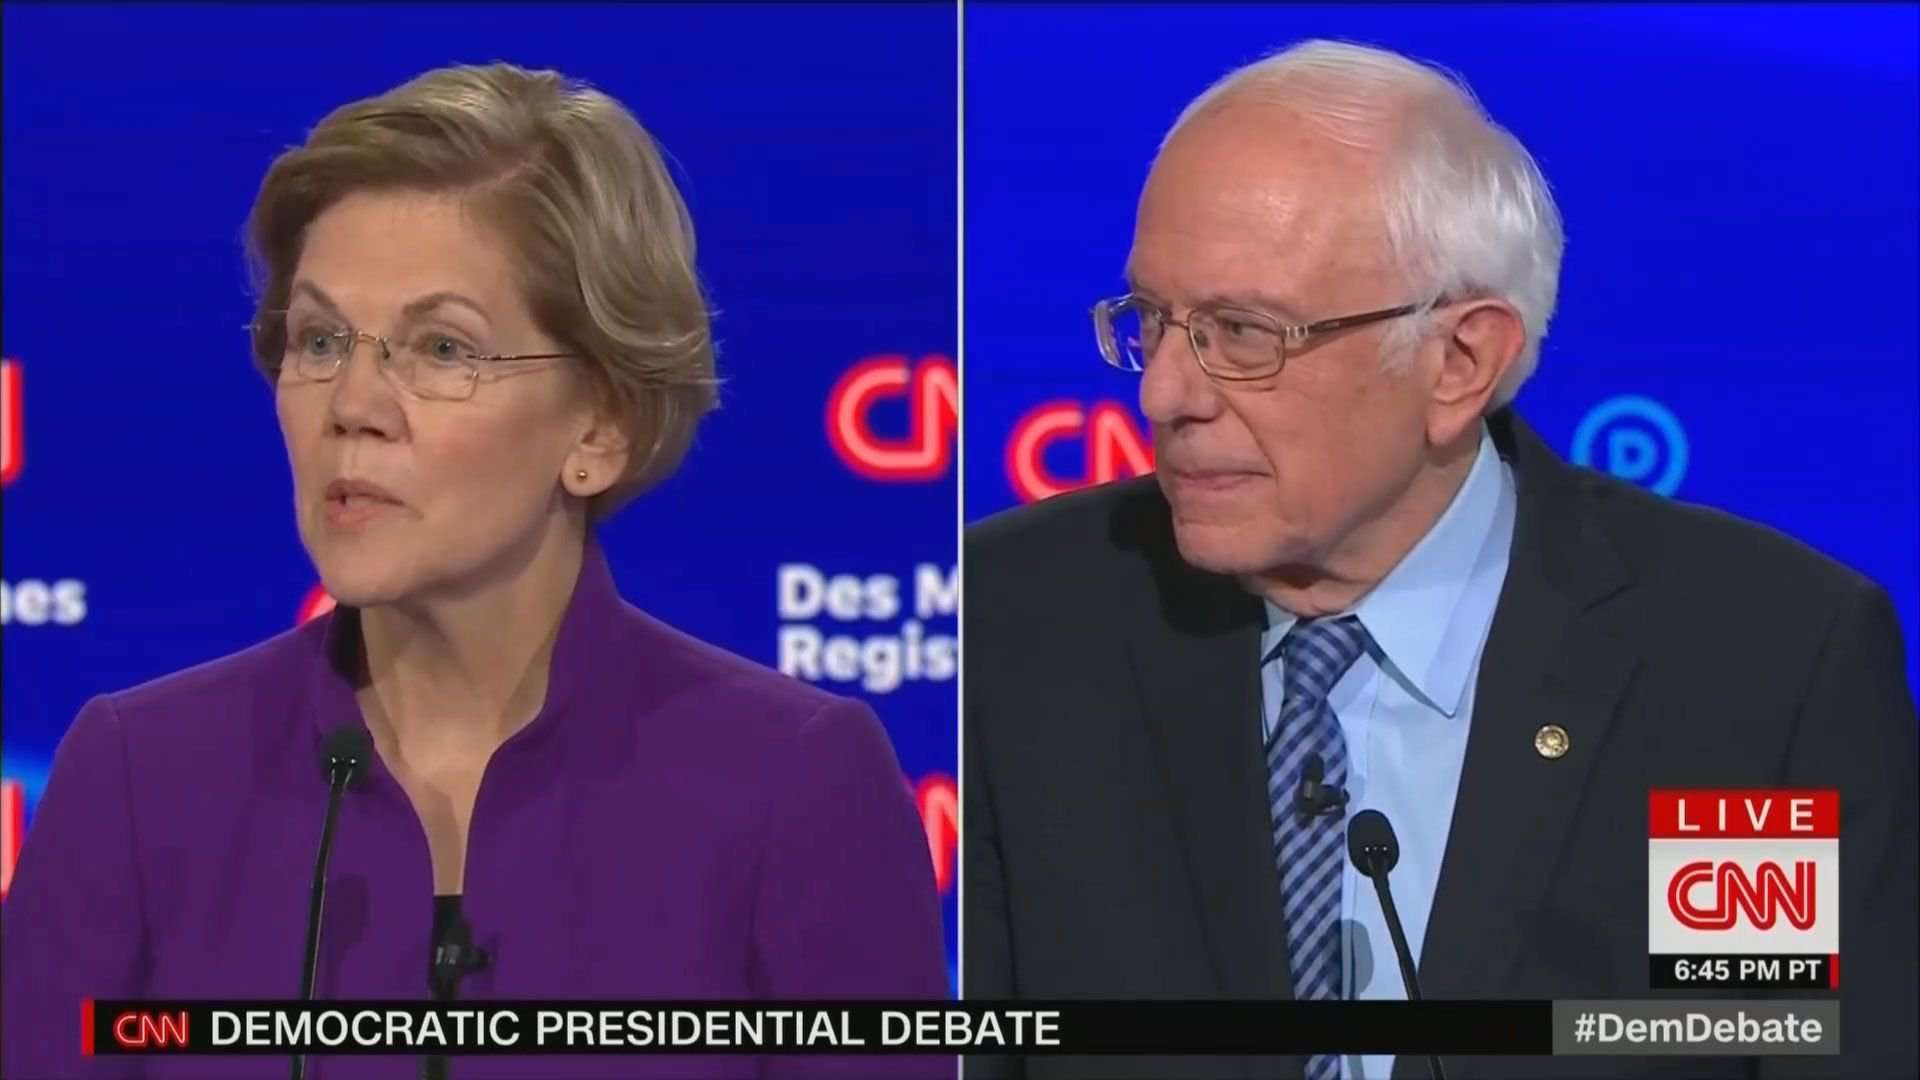 image for #CNNisTrash trending for perceived bias against Bernie Sanders at Democratic debate